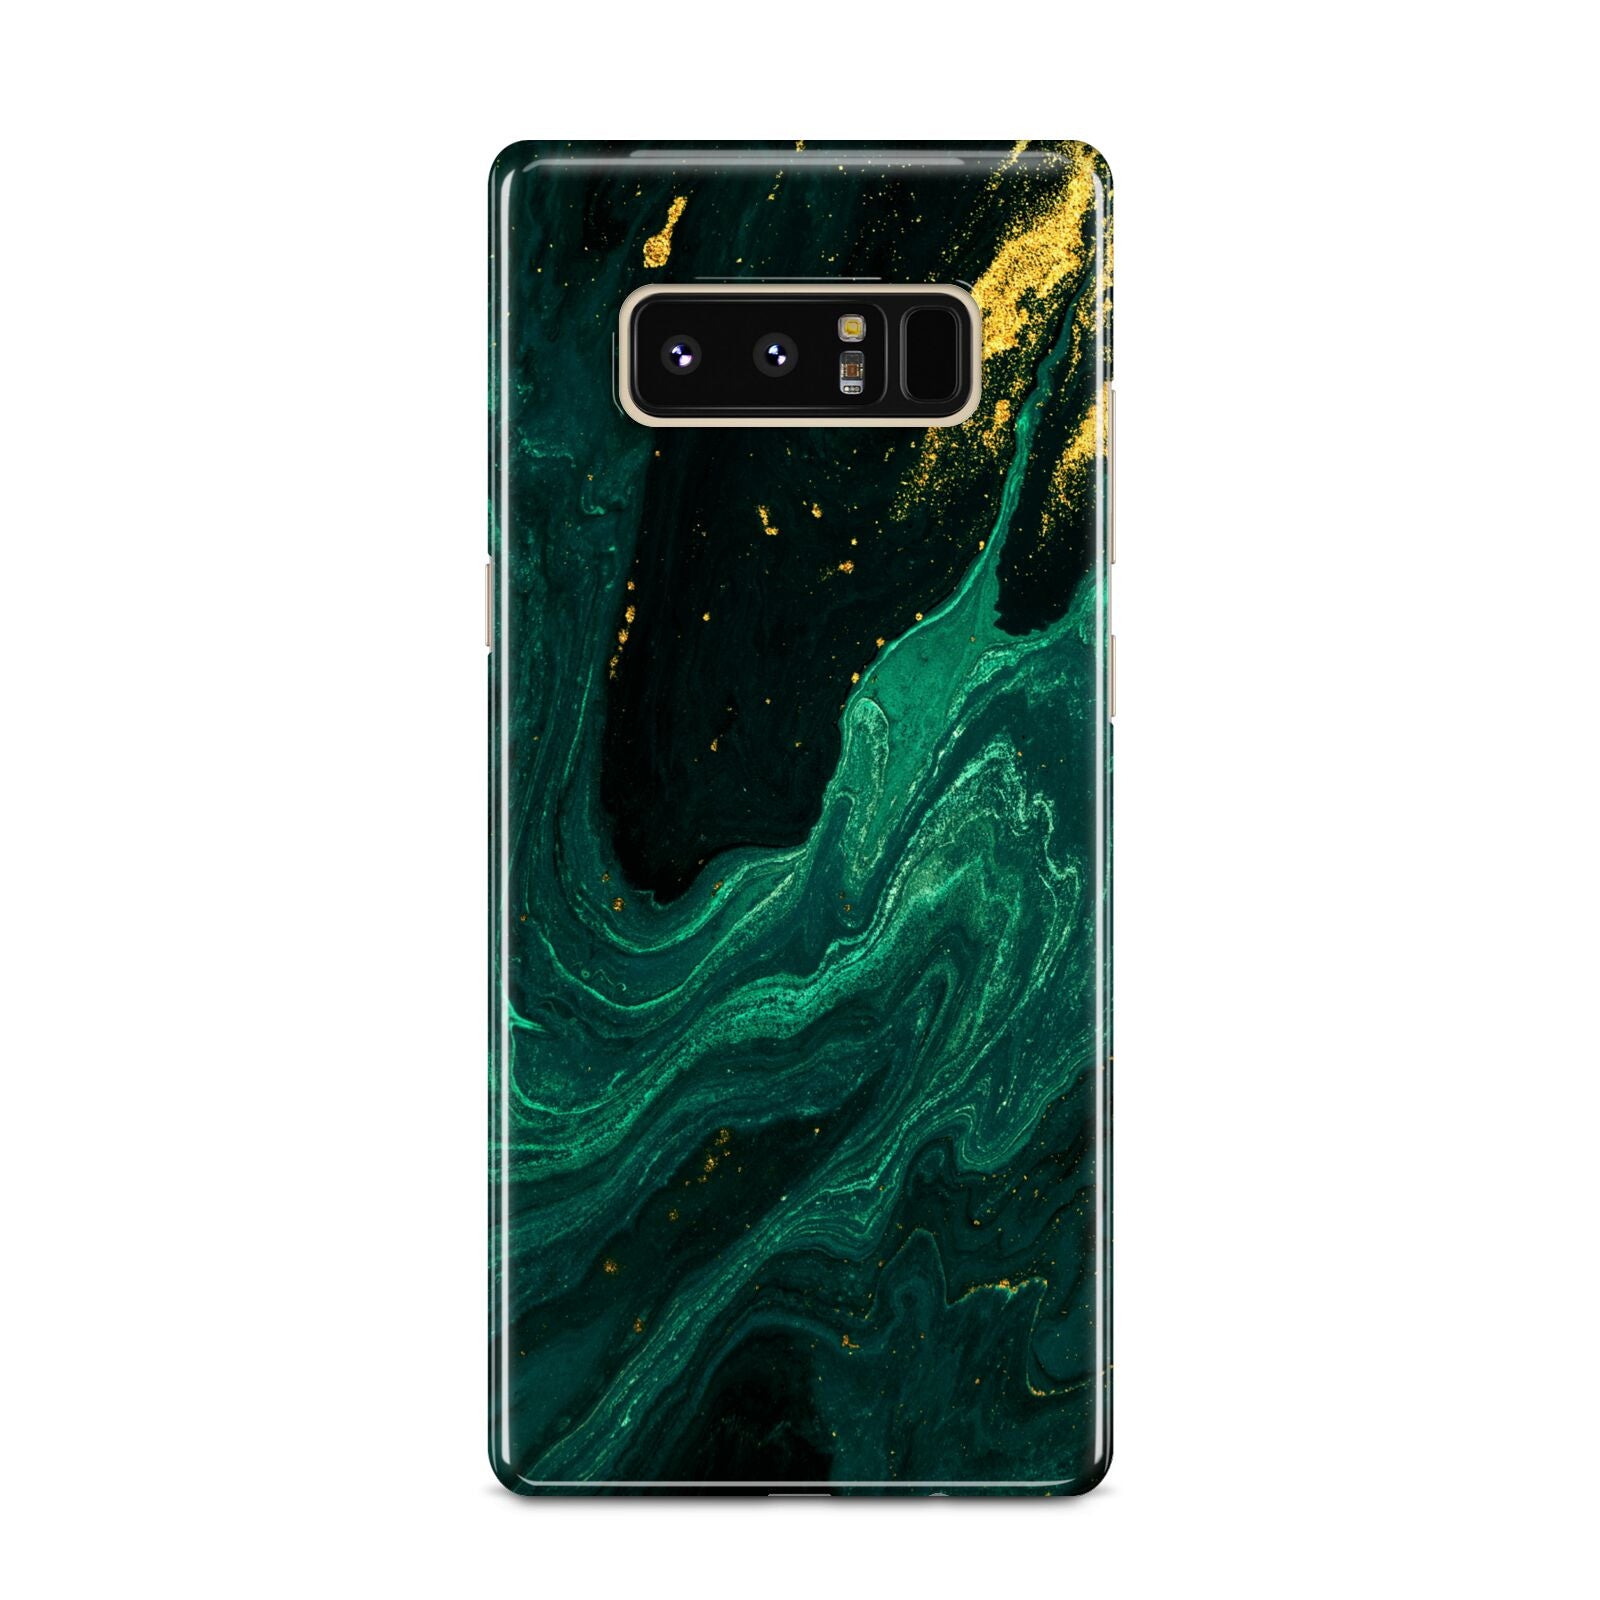 Emerald Green Samsung Galaxy Note 8 Case